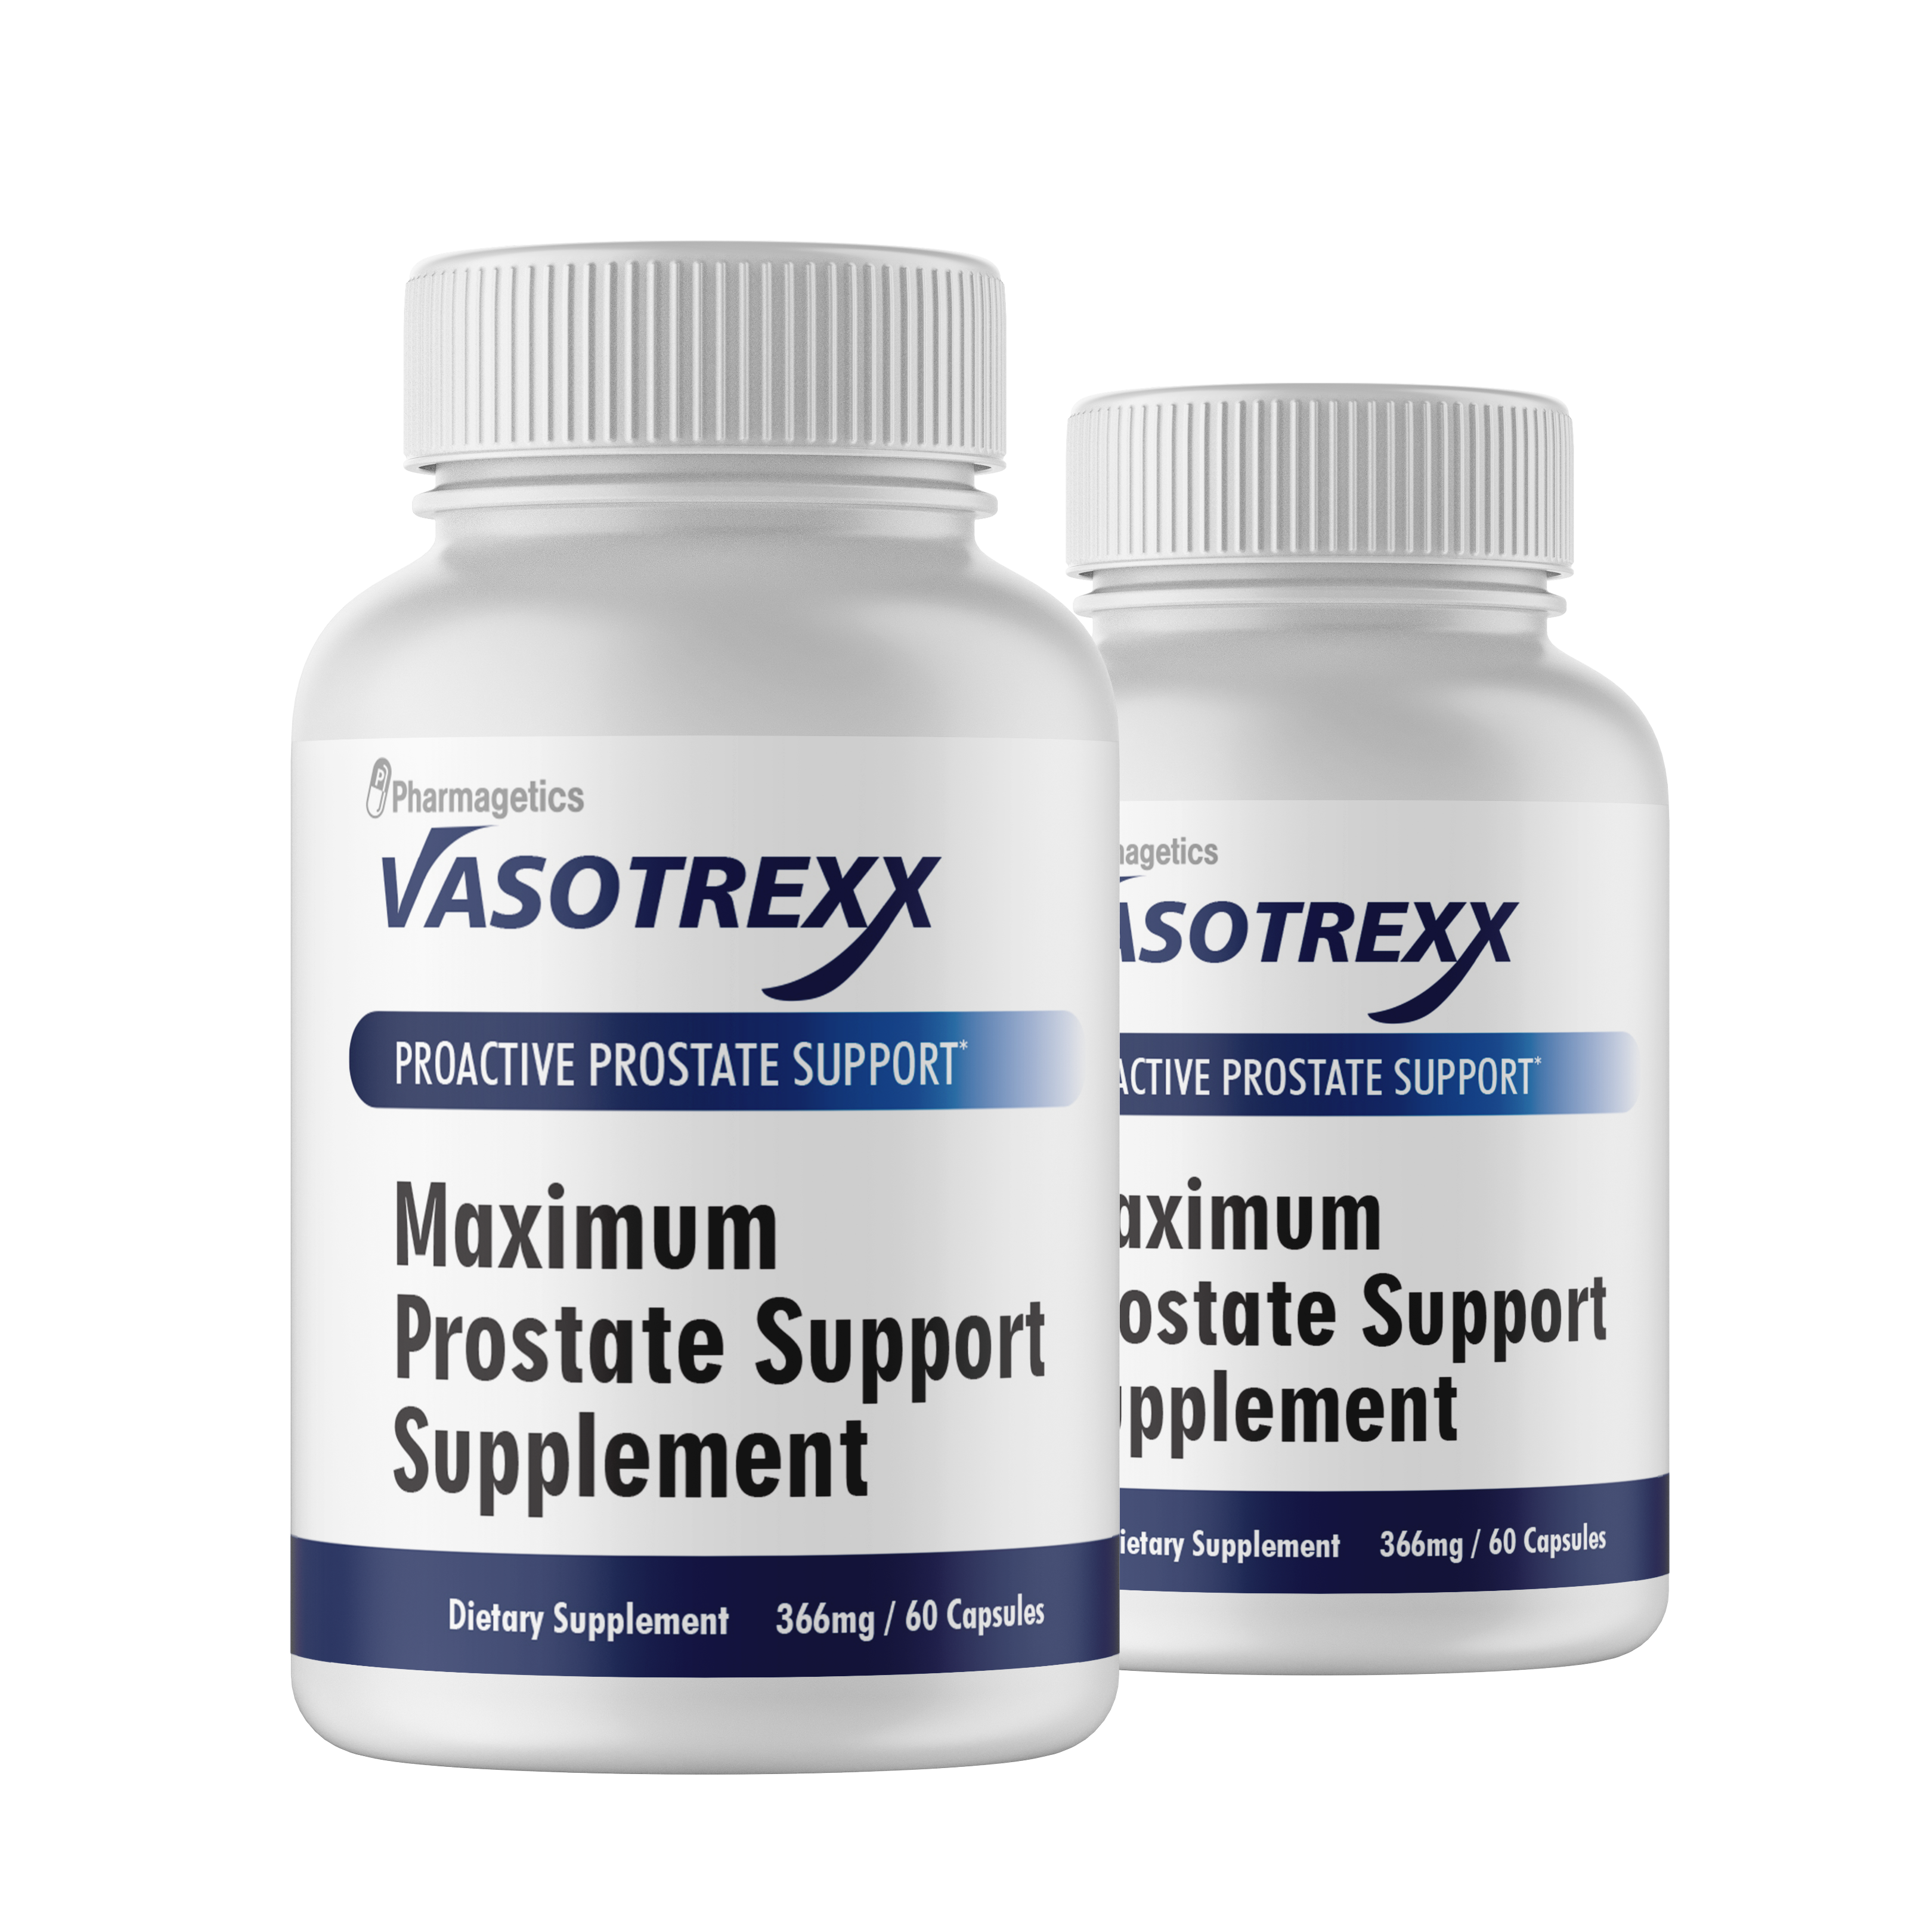 Vasotrexx - 2 Bottles